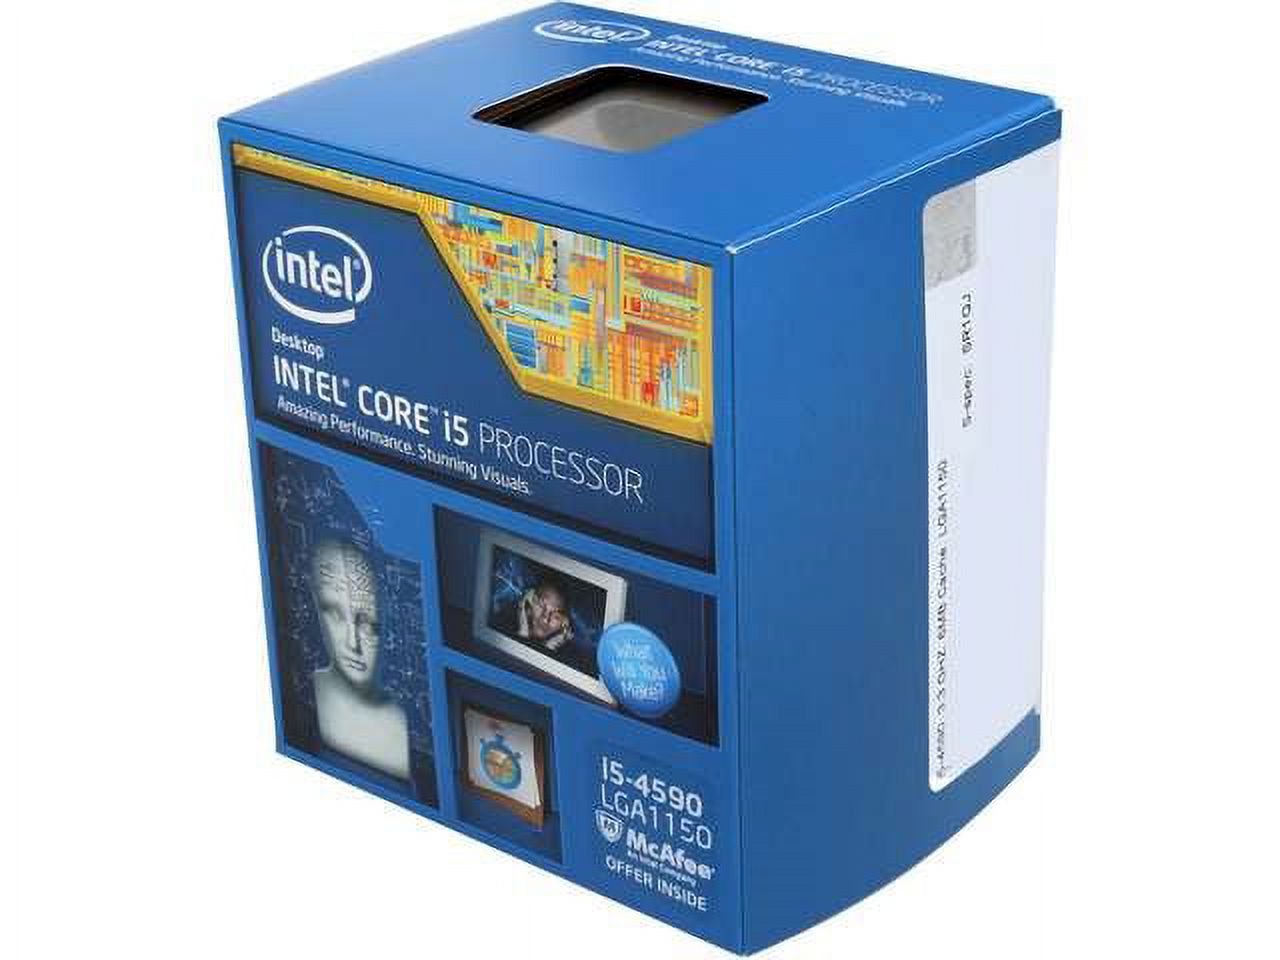 Intel Core i5-4590 Haswell Quad-Core 3.3 GHz LGA 1150 84W BX80646I54590 Desktop Processor Intel HD Graphics 4600 - image 1 of 2